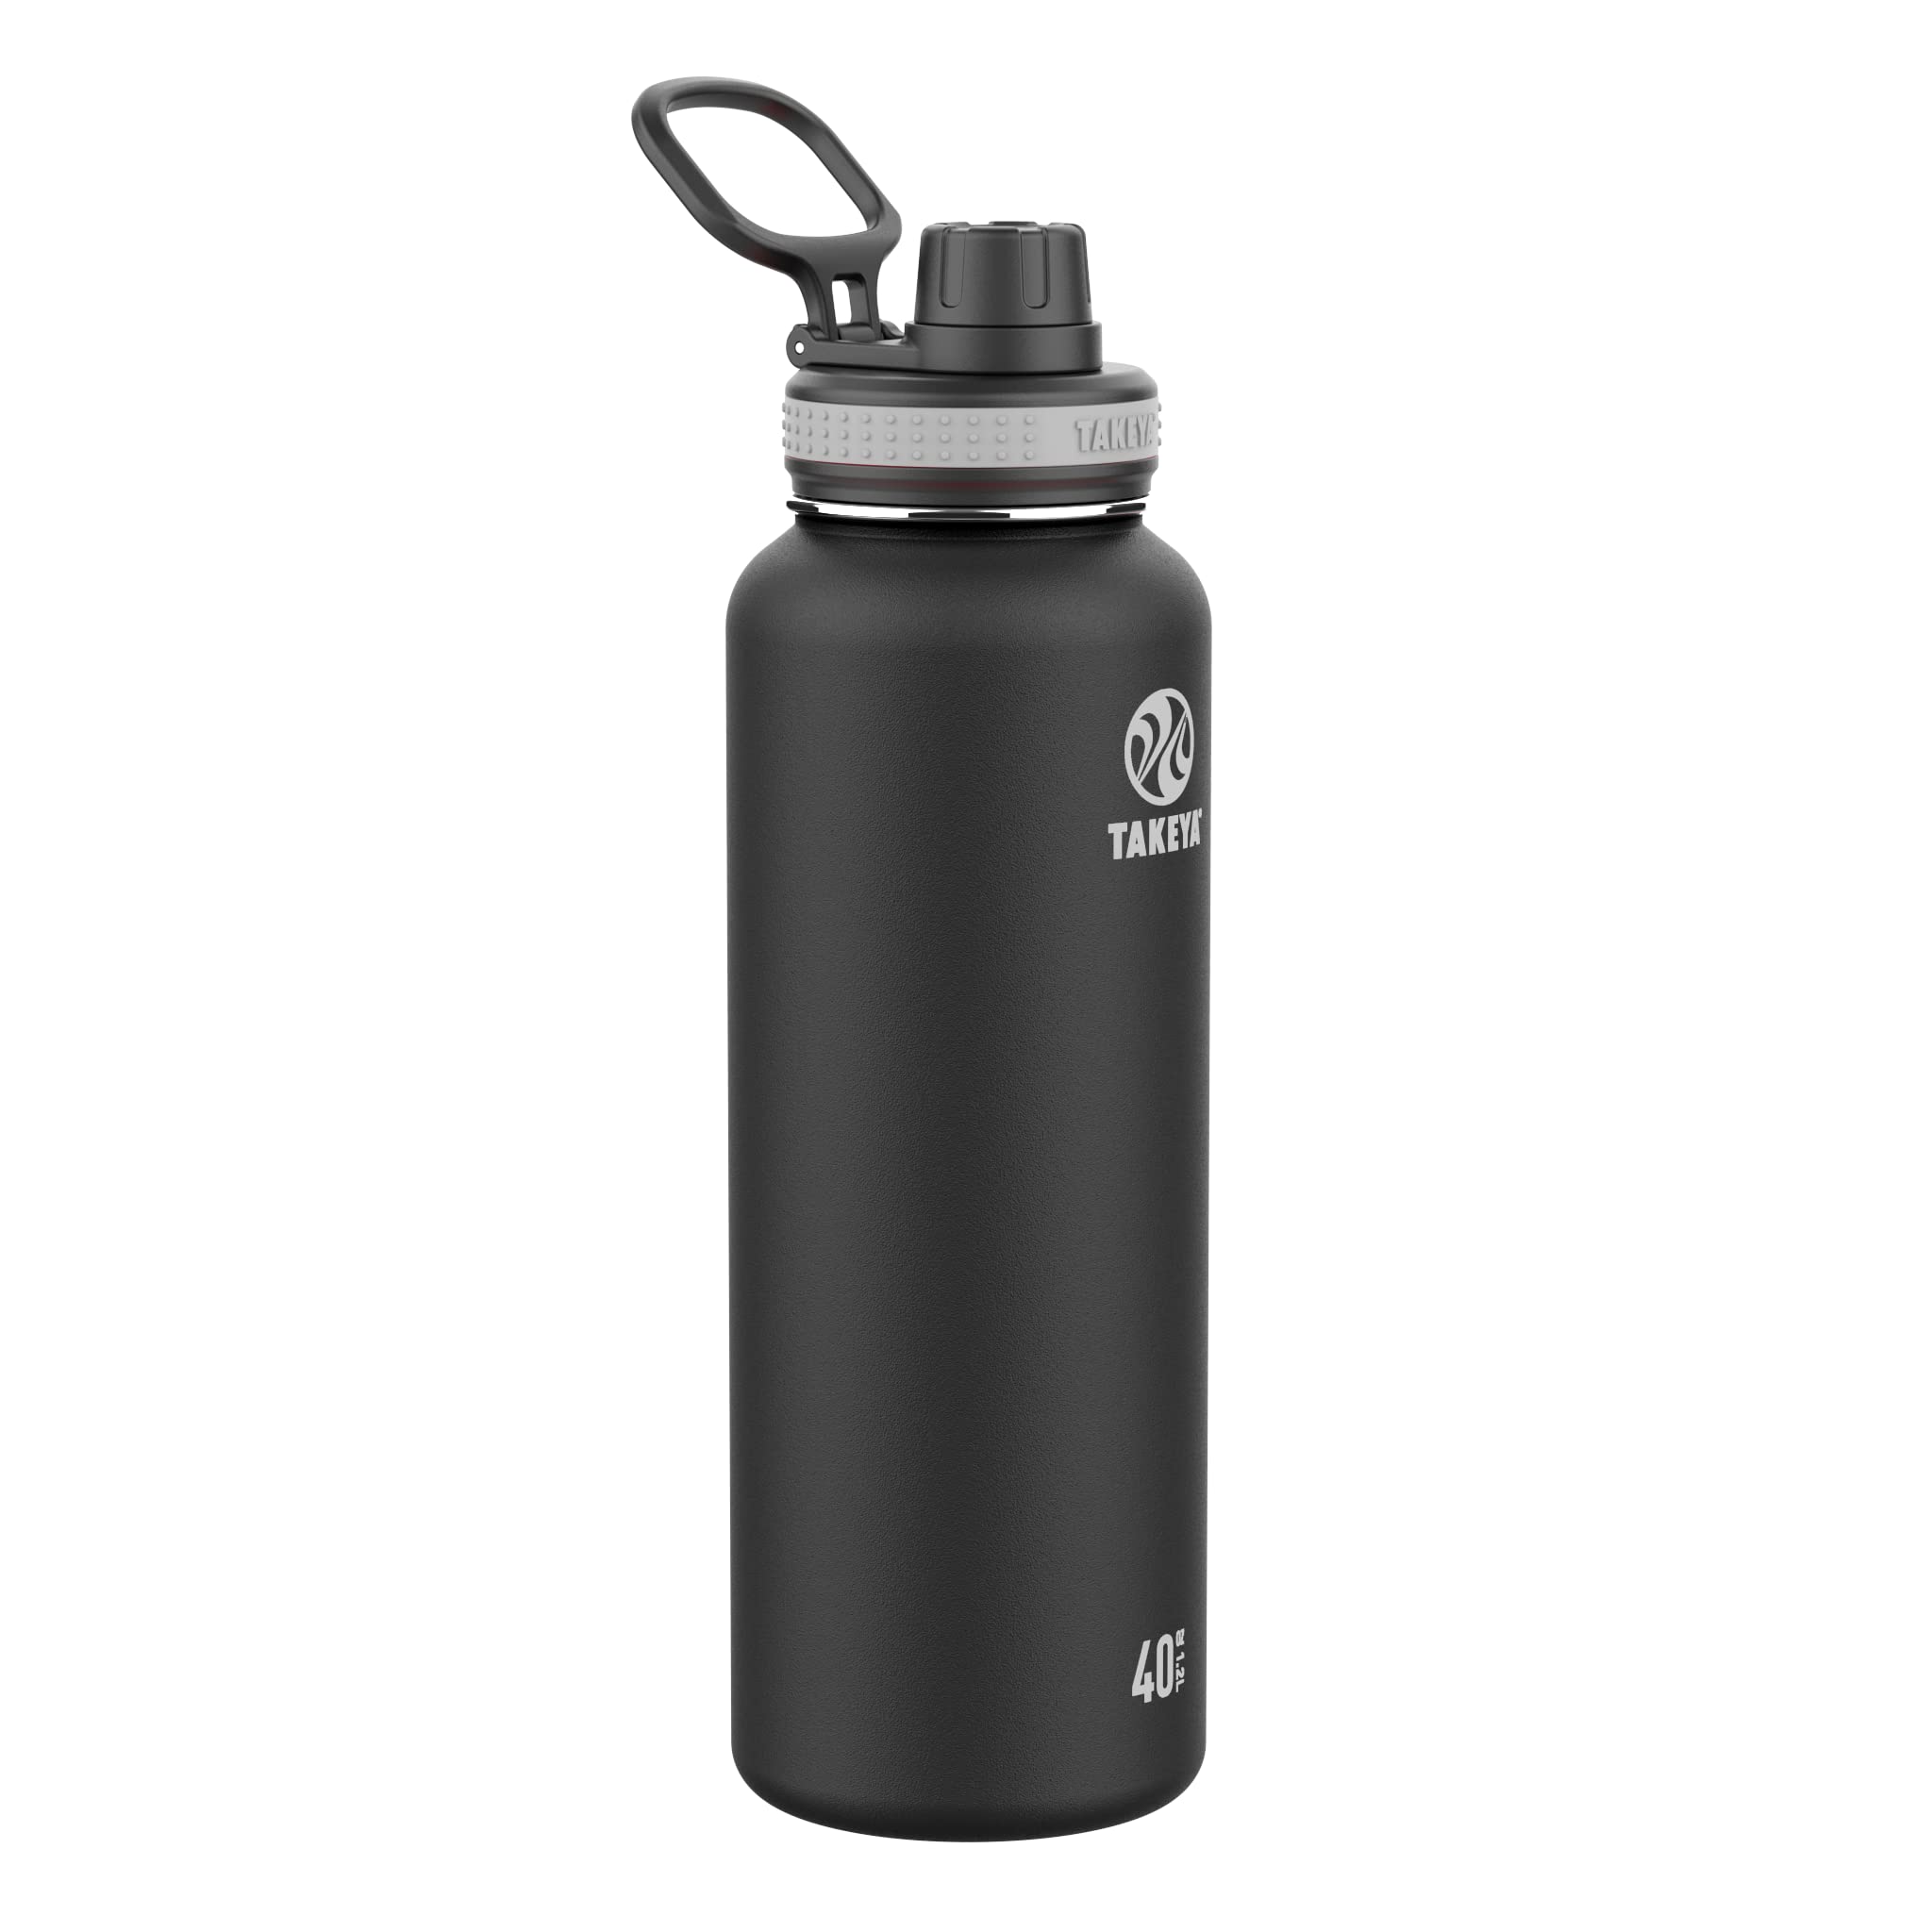 Takeya Originals Vacuum Insulated Stainless Steel Water Bottle, 40 oz, Black